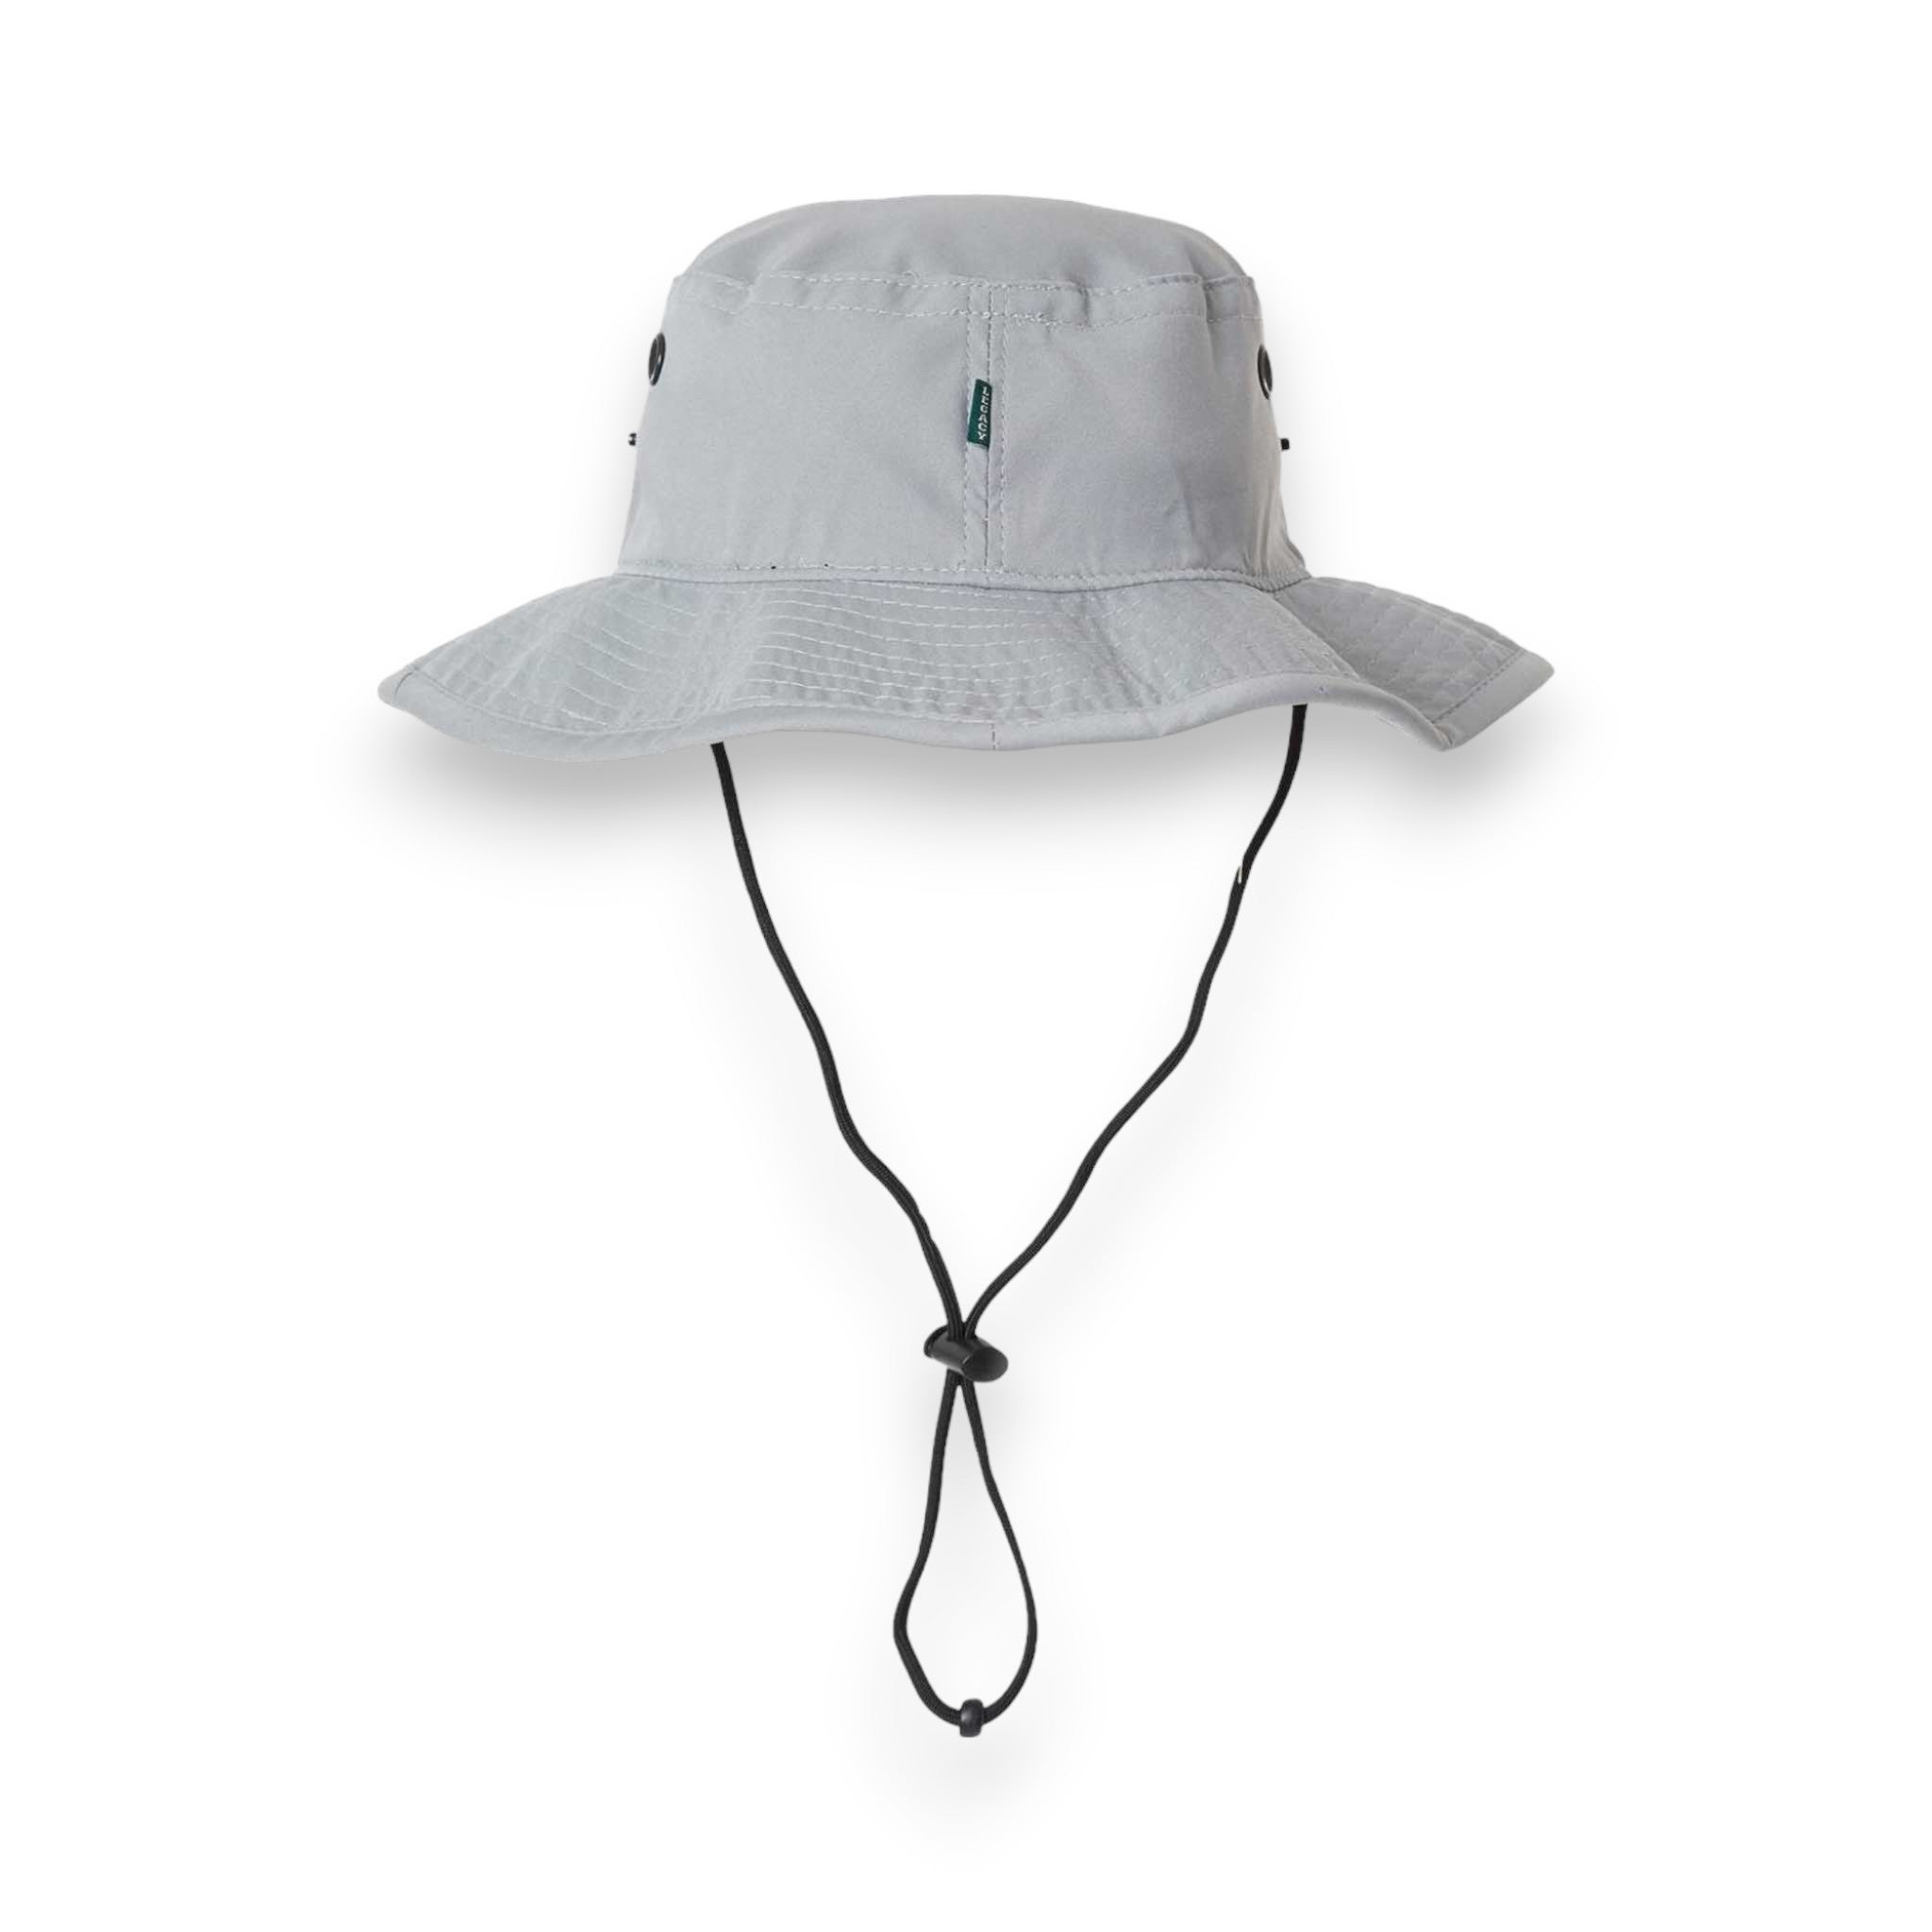 Back view of LEGACY CFB custom hat in shark grey